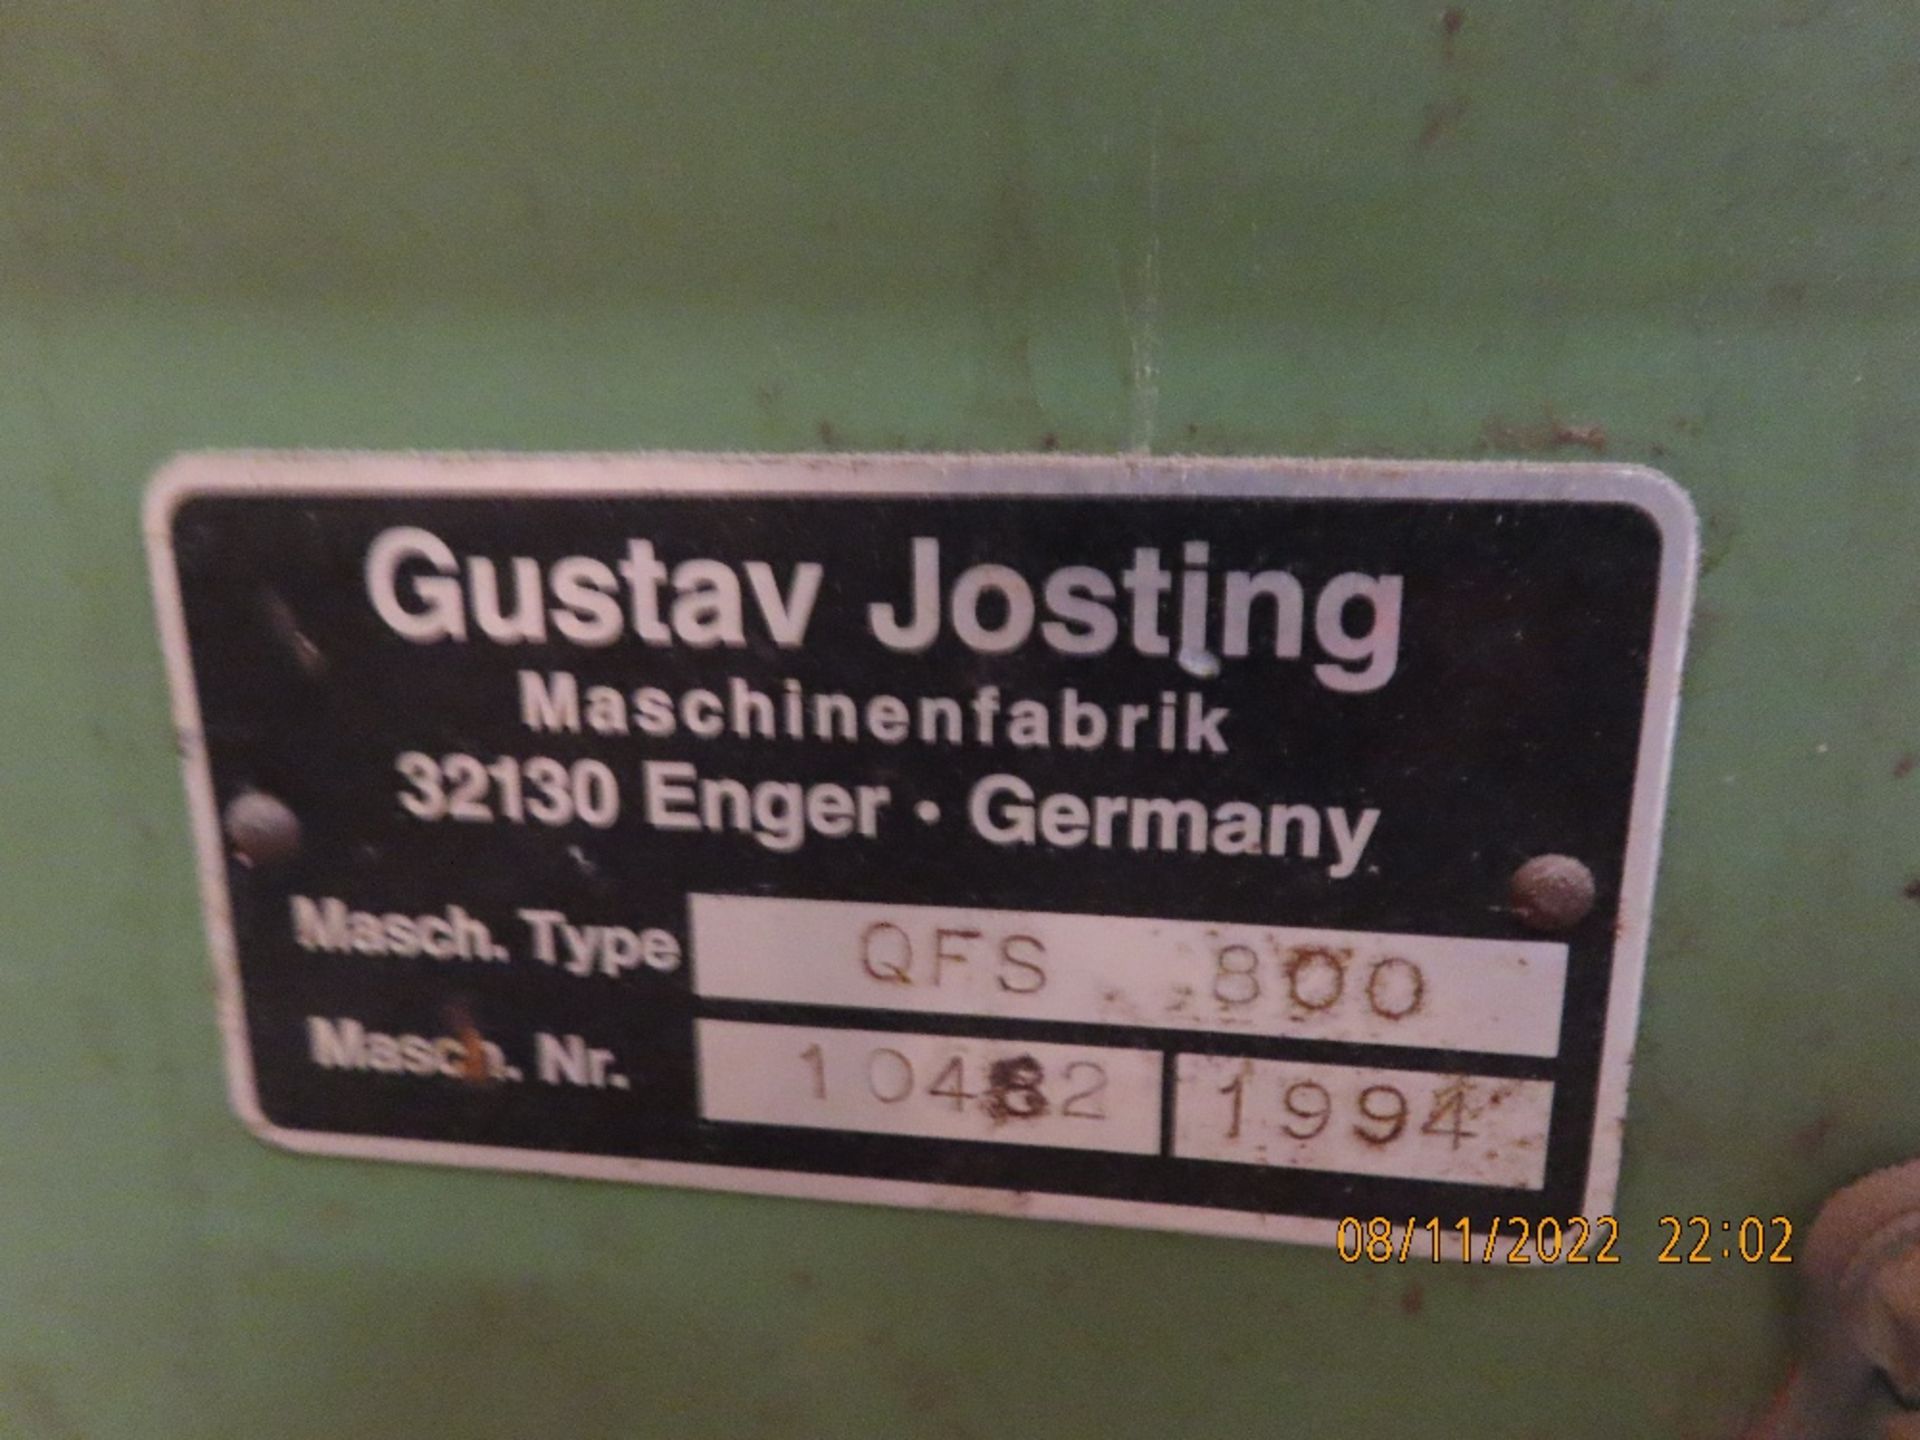 Josting Type QFS-806, 32'' Guillotine Machine #10482 - Image 2 of 2